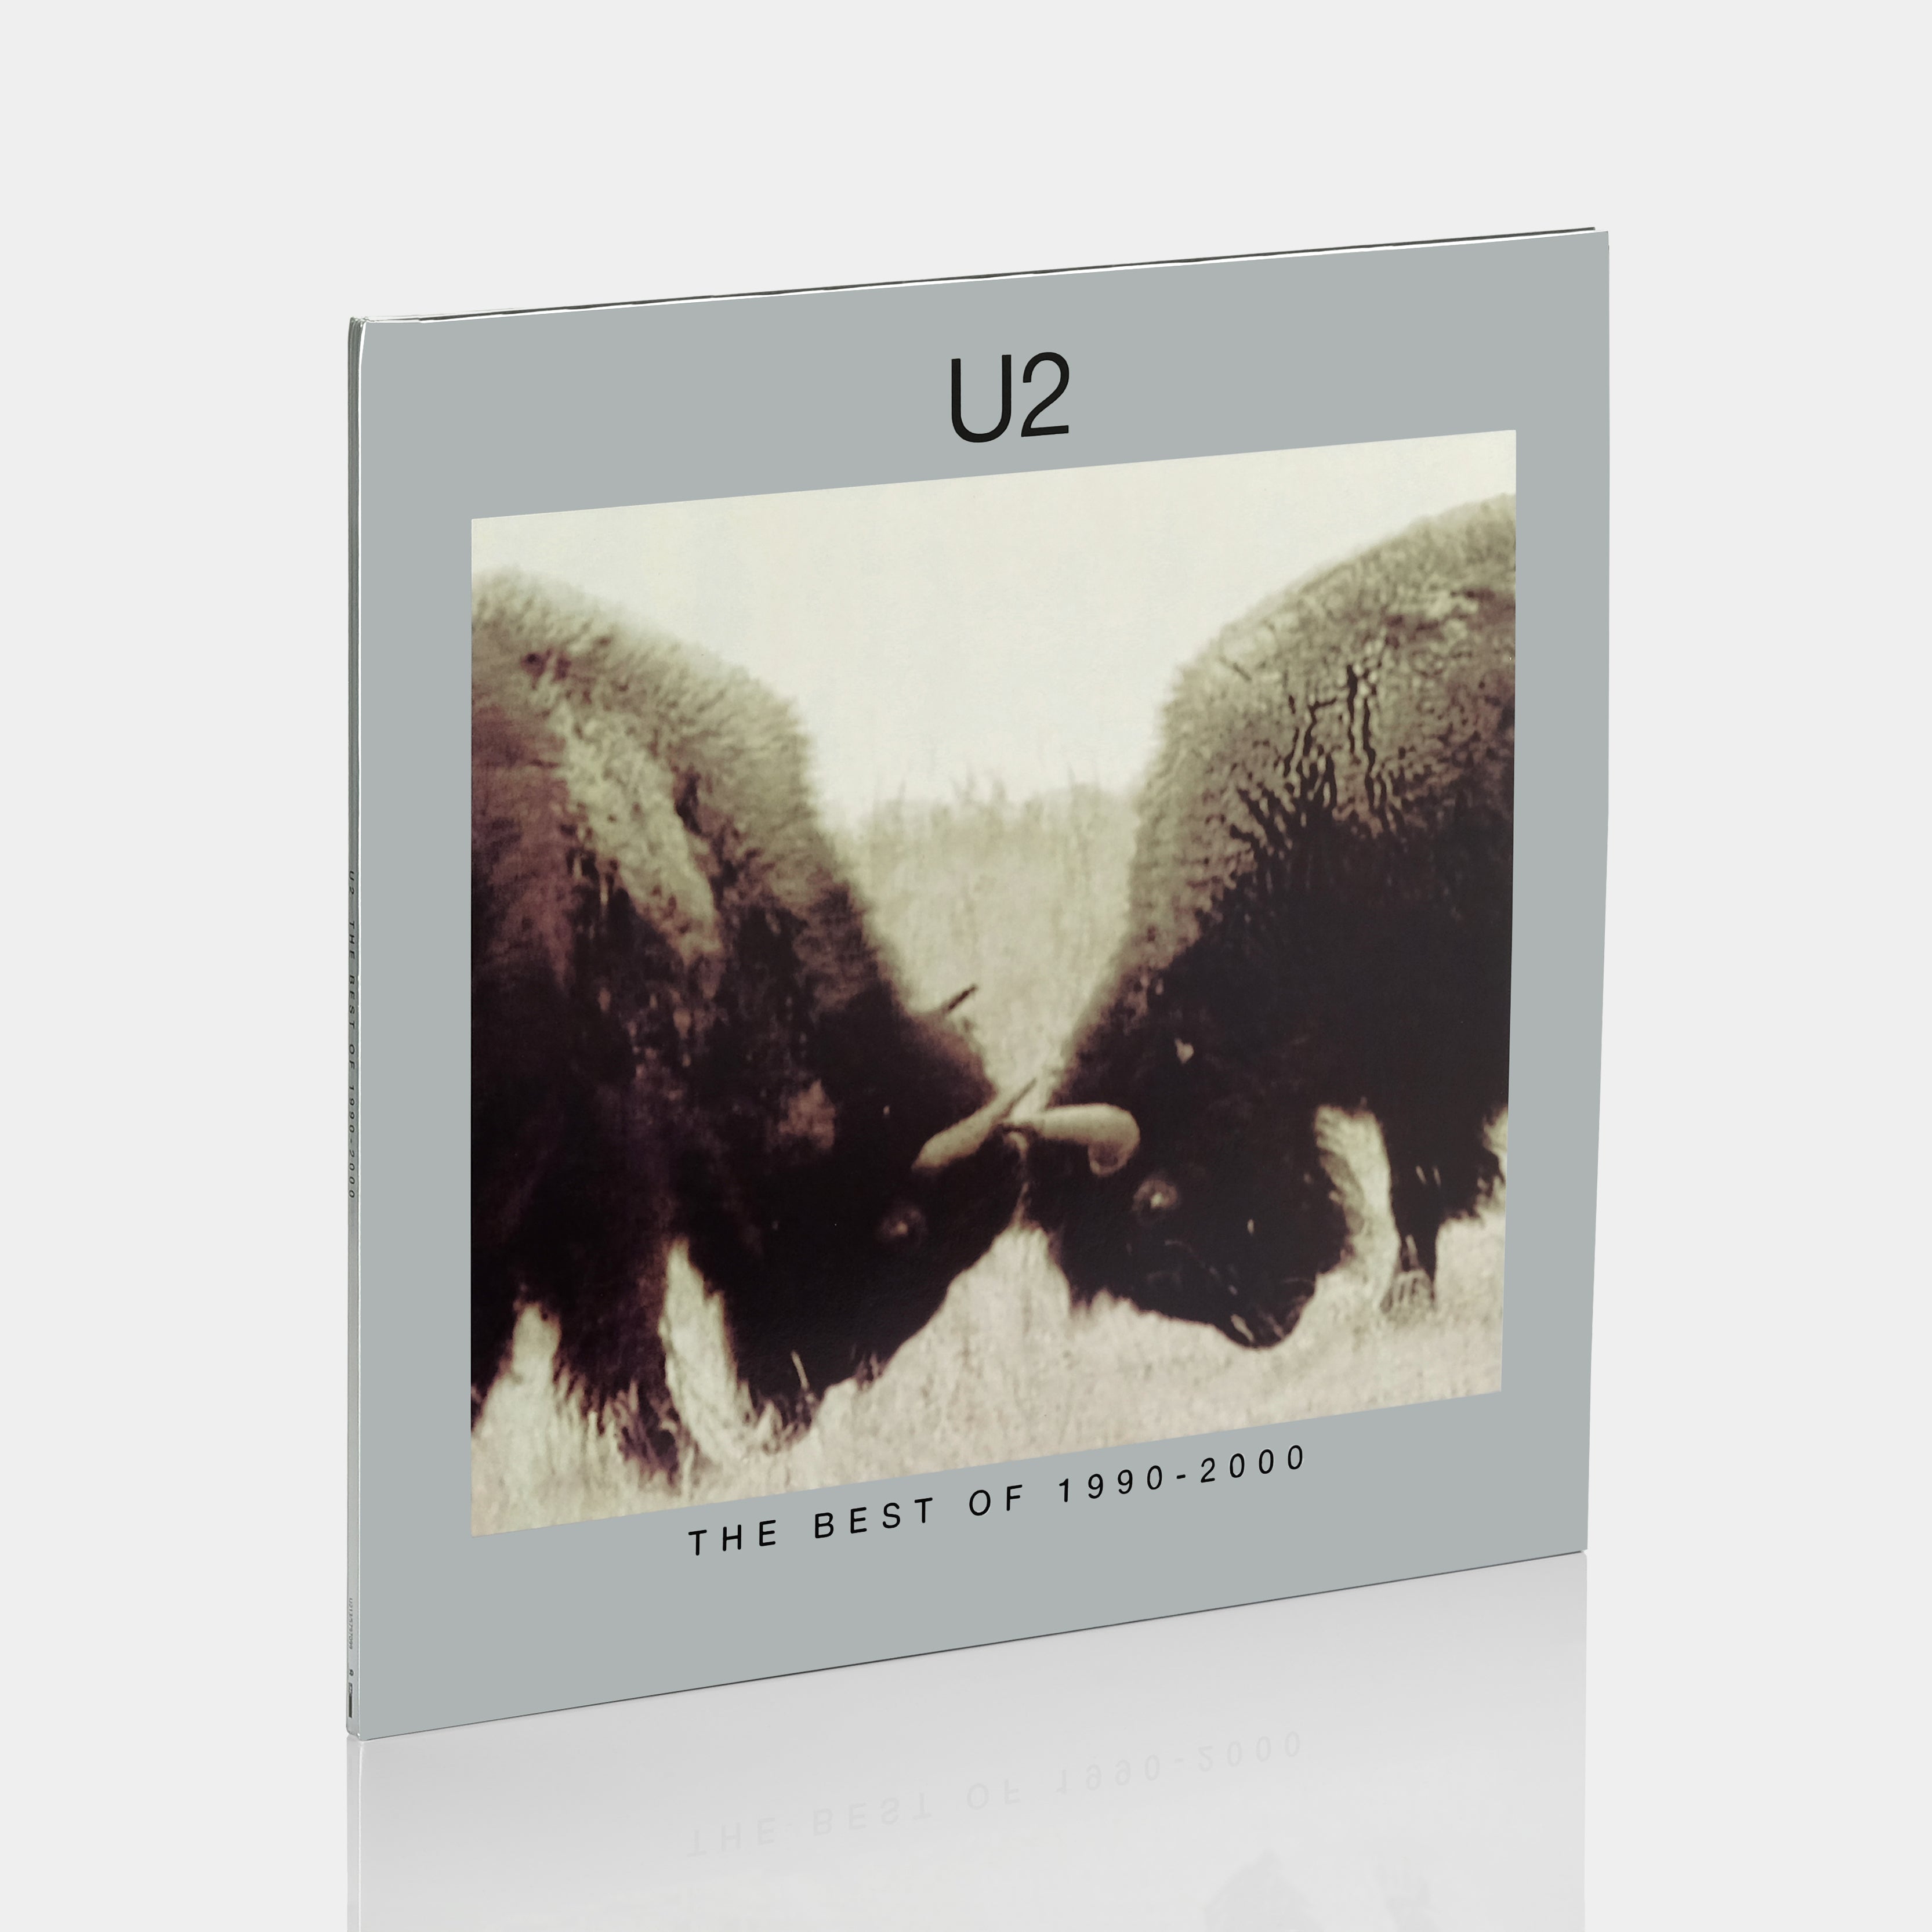 U2 - The Best of 1990-2000 2xLP Vinyl Record